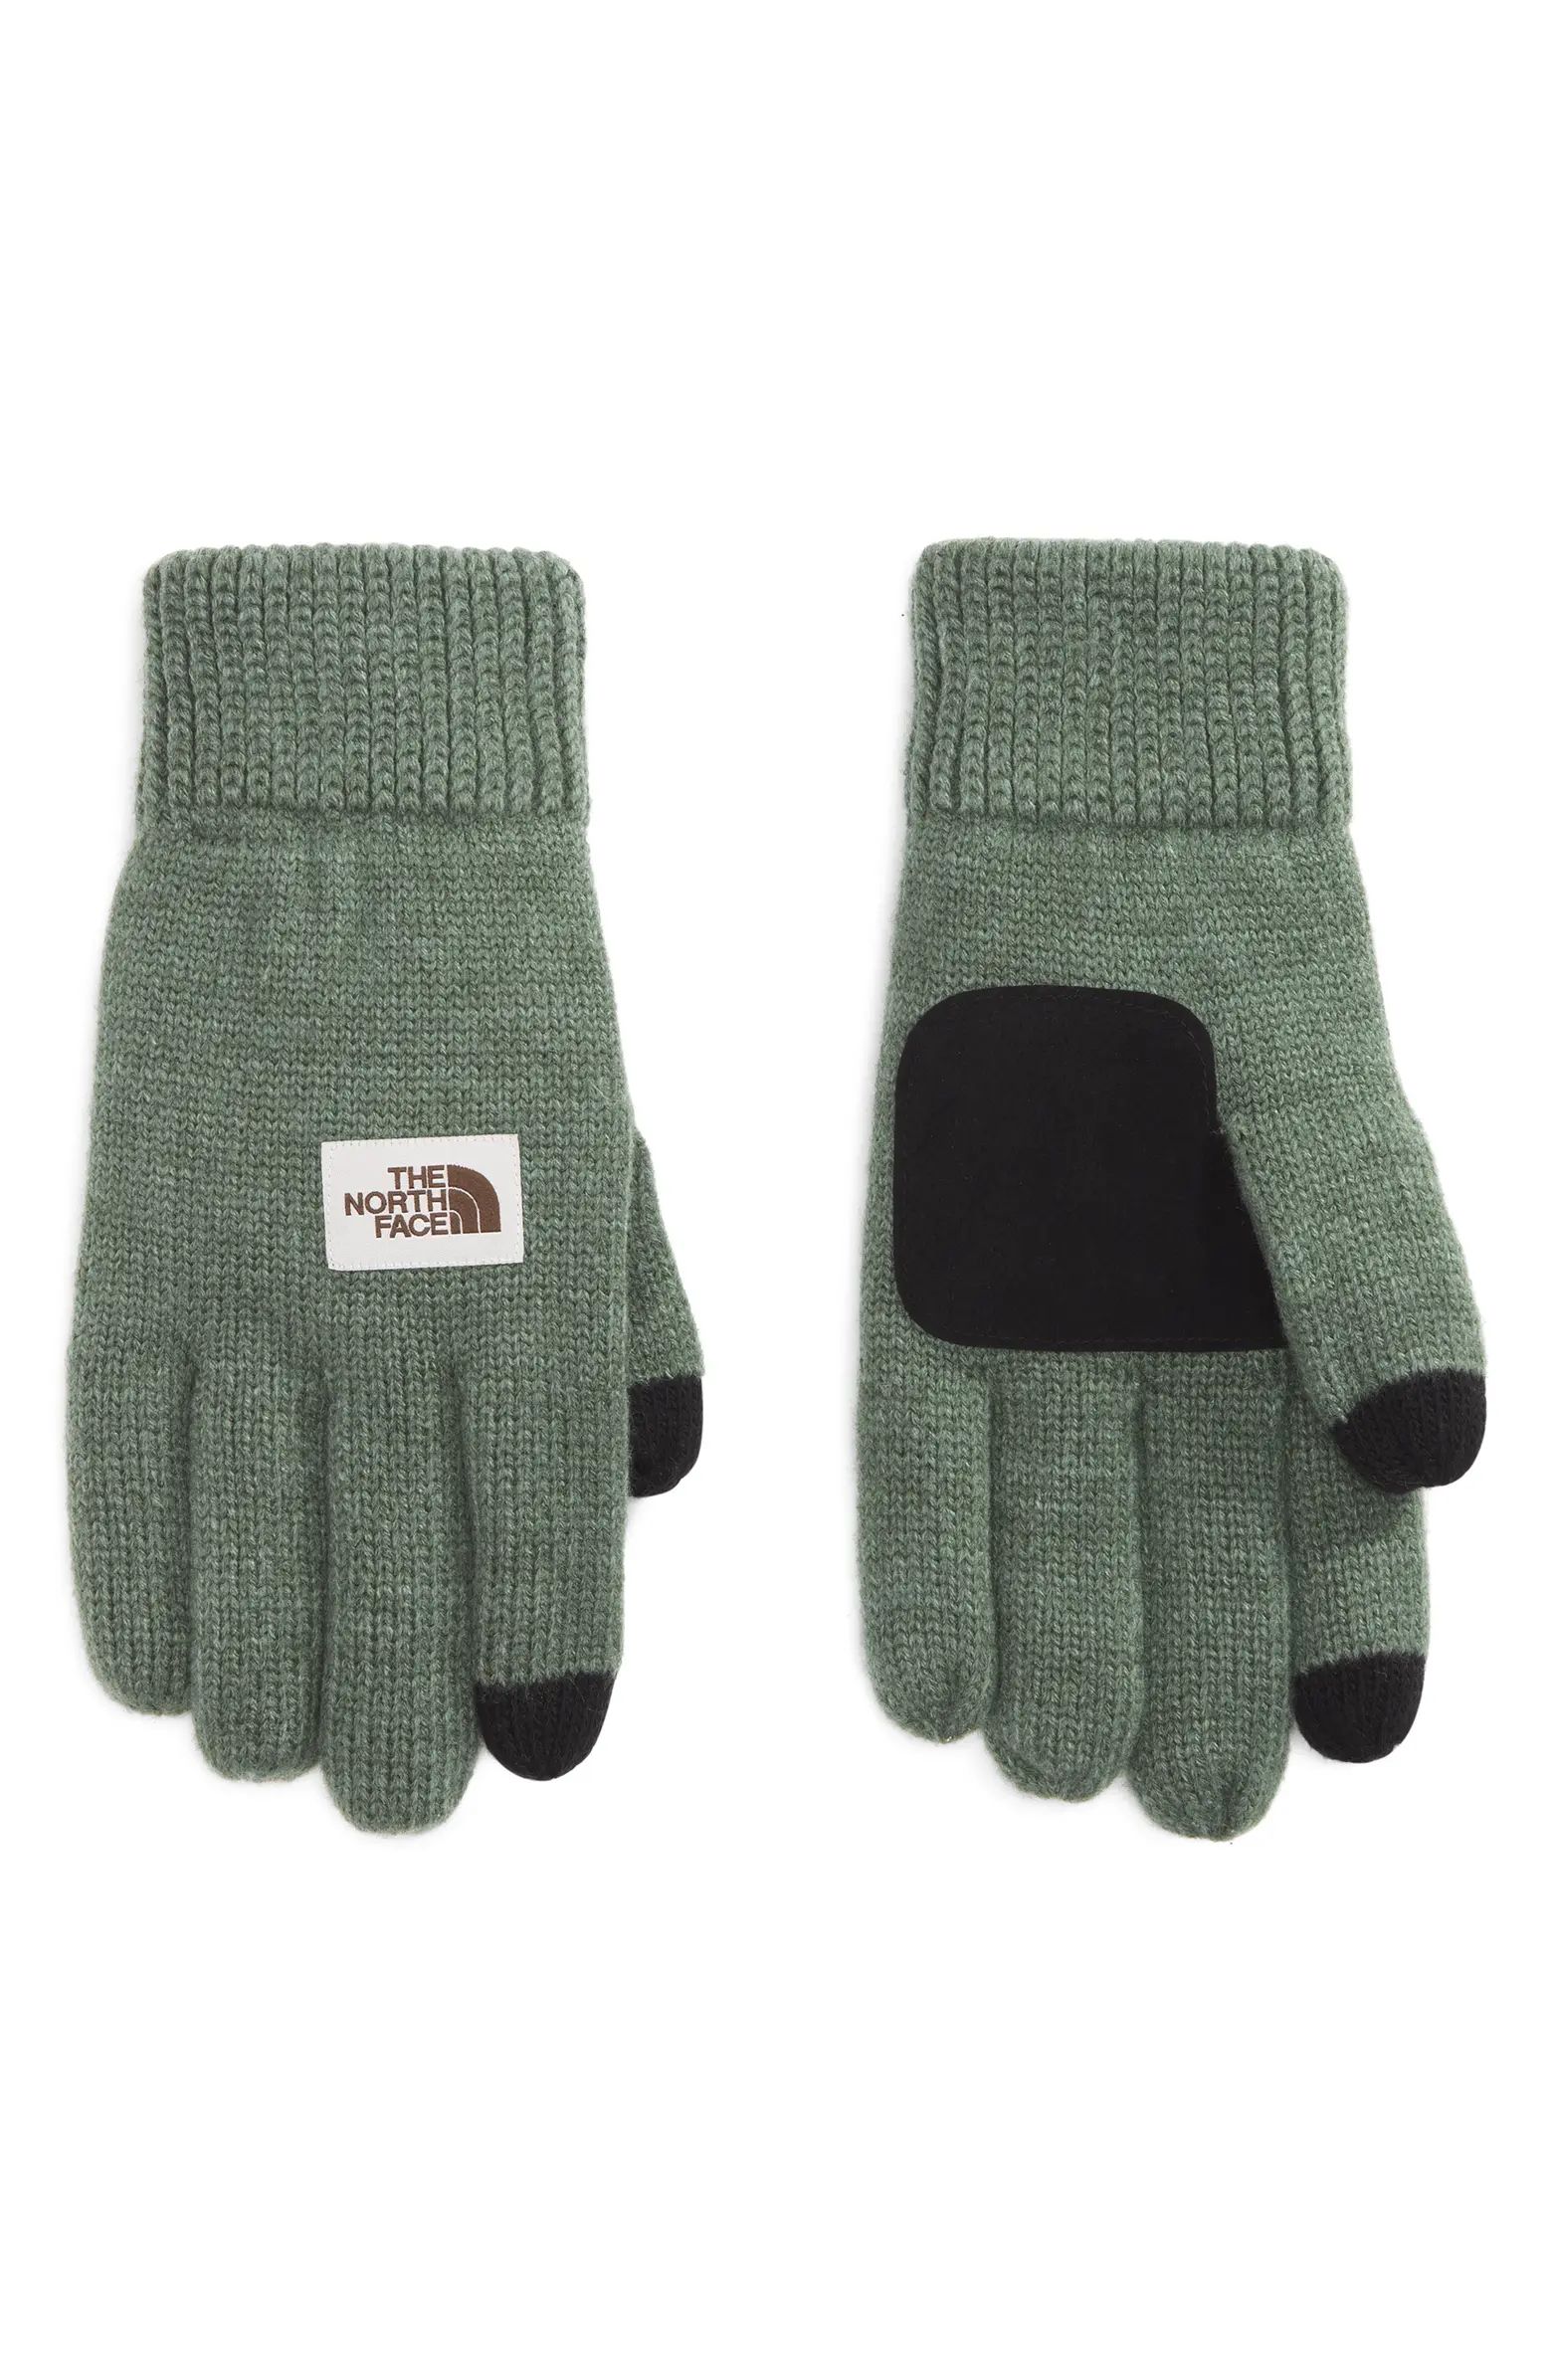 Etip Salty Dog Knit Tech Gloves | Nordstrom